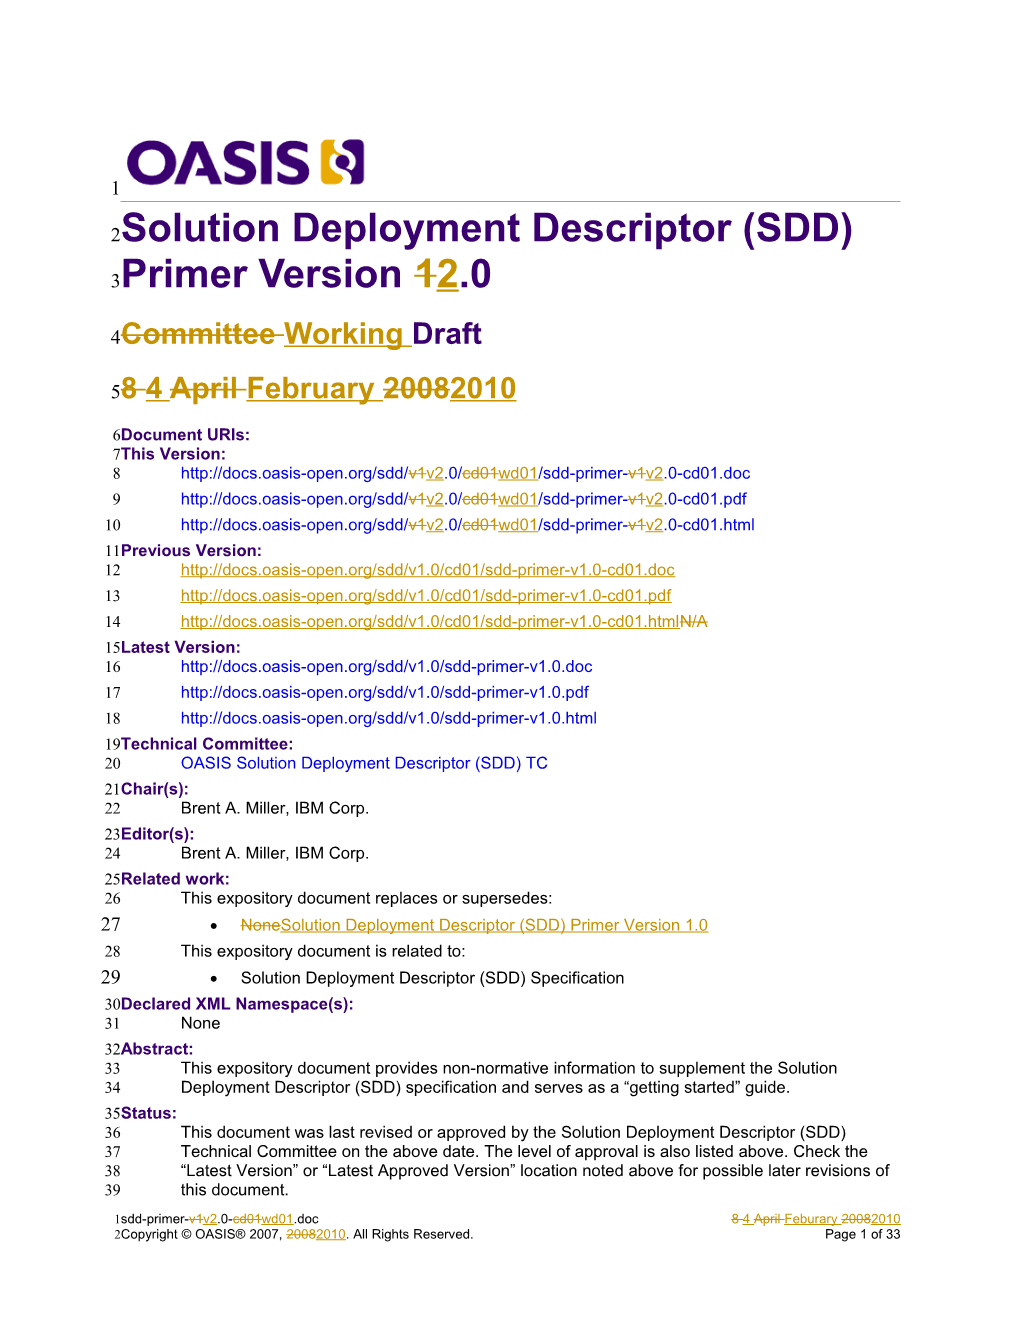 OASIS Solution Deployment Descriptor (SDD) Primer s1